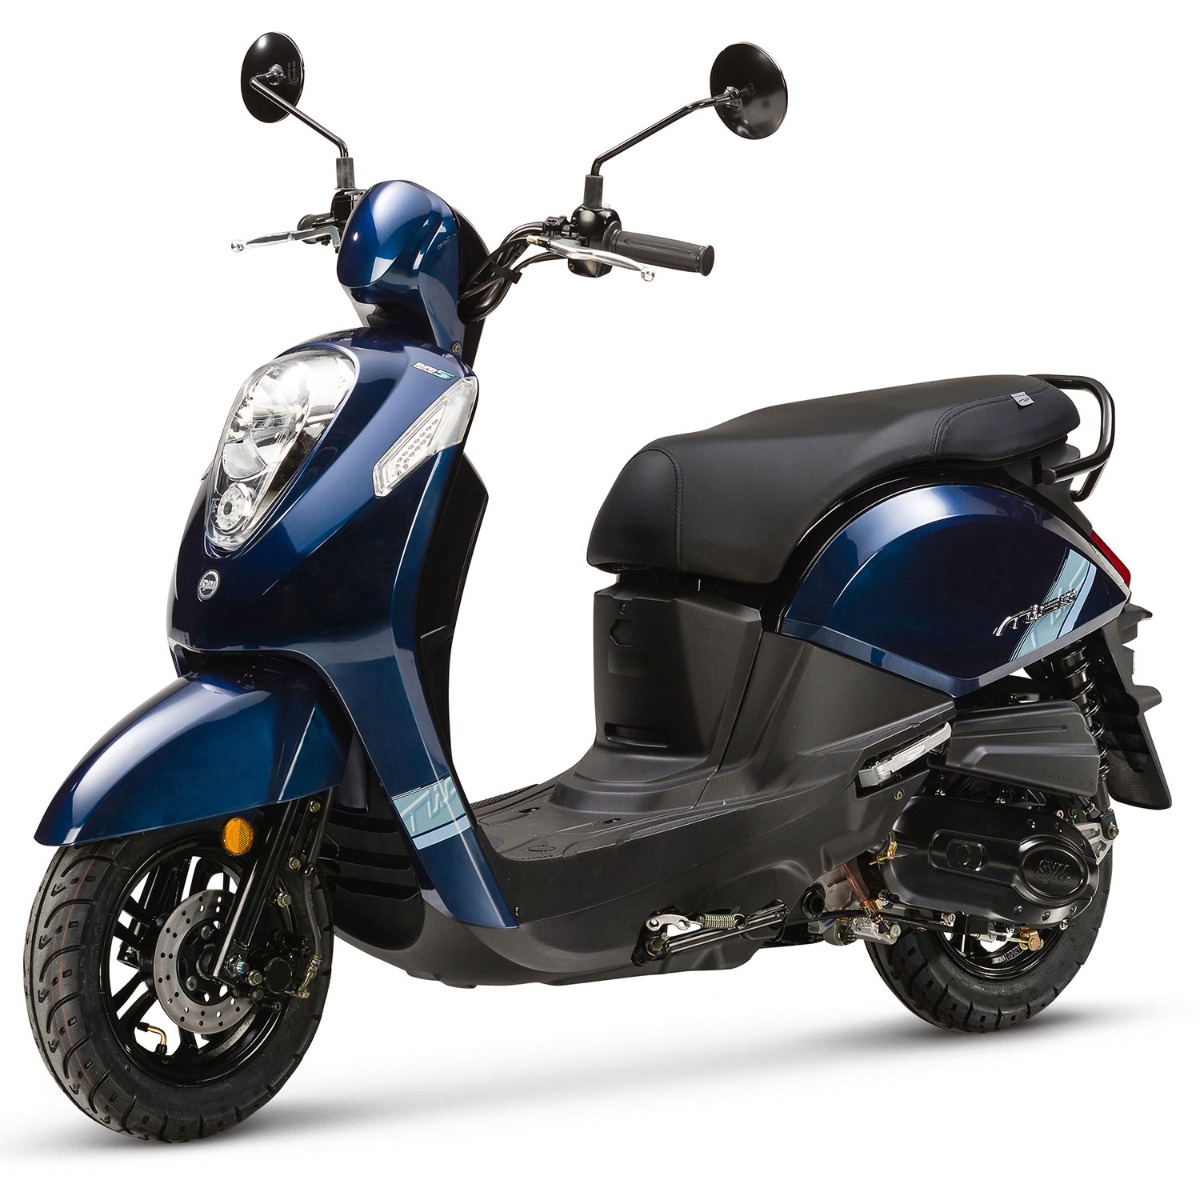 Sym Mio 50i Blauw - Benzine Scooter